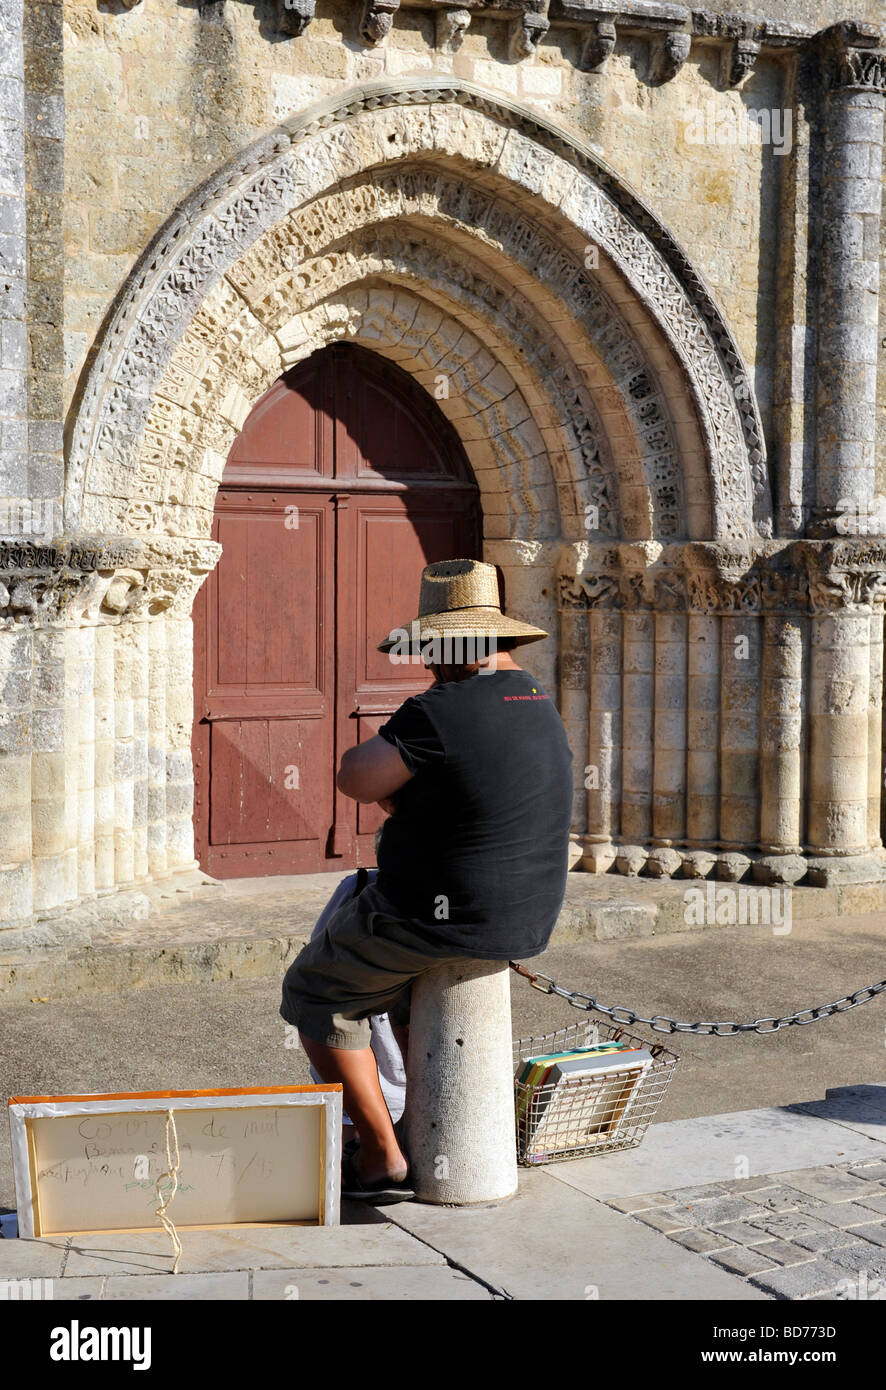 Ars en Re church artist hat bollard fat door arch Stock Photo